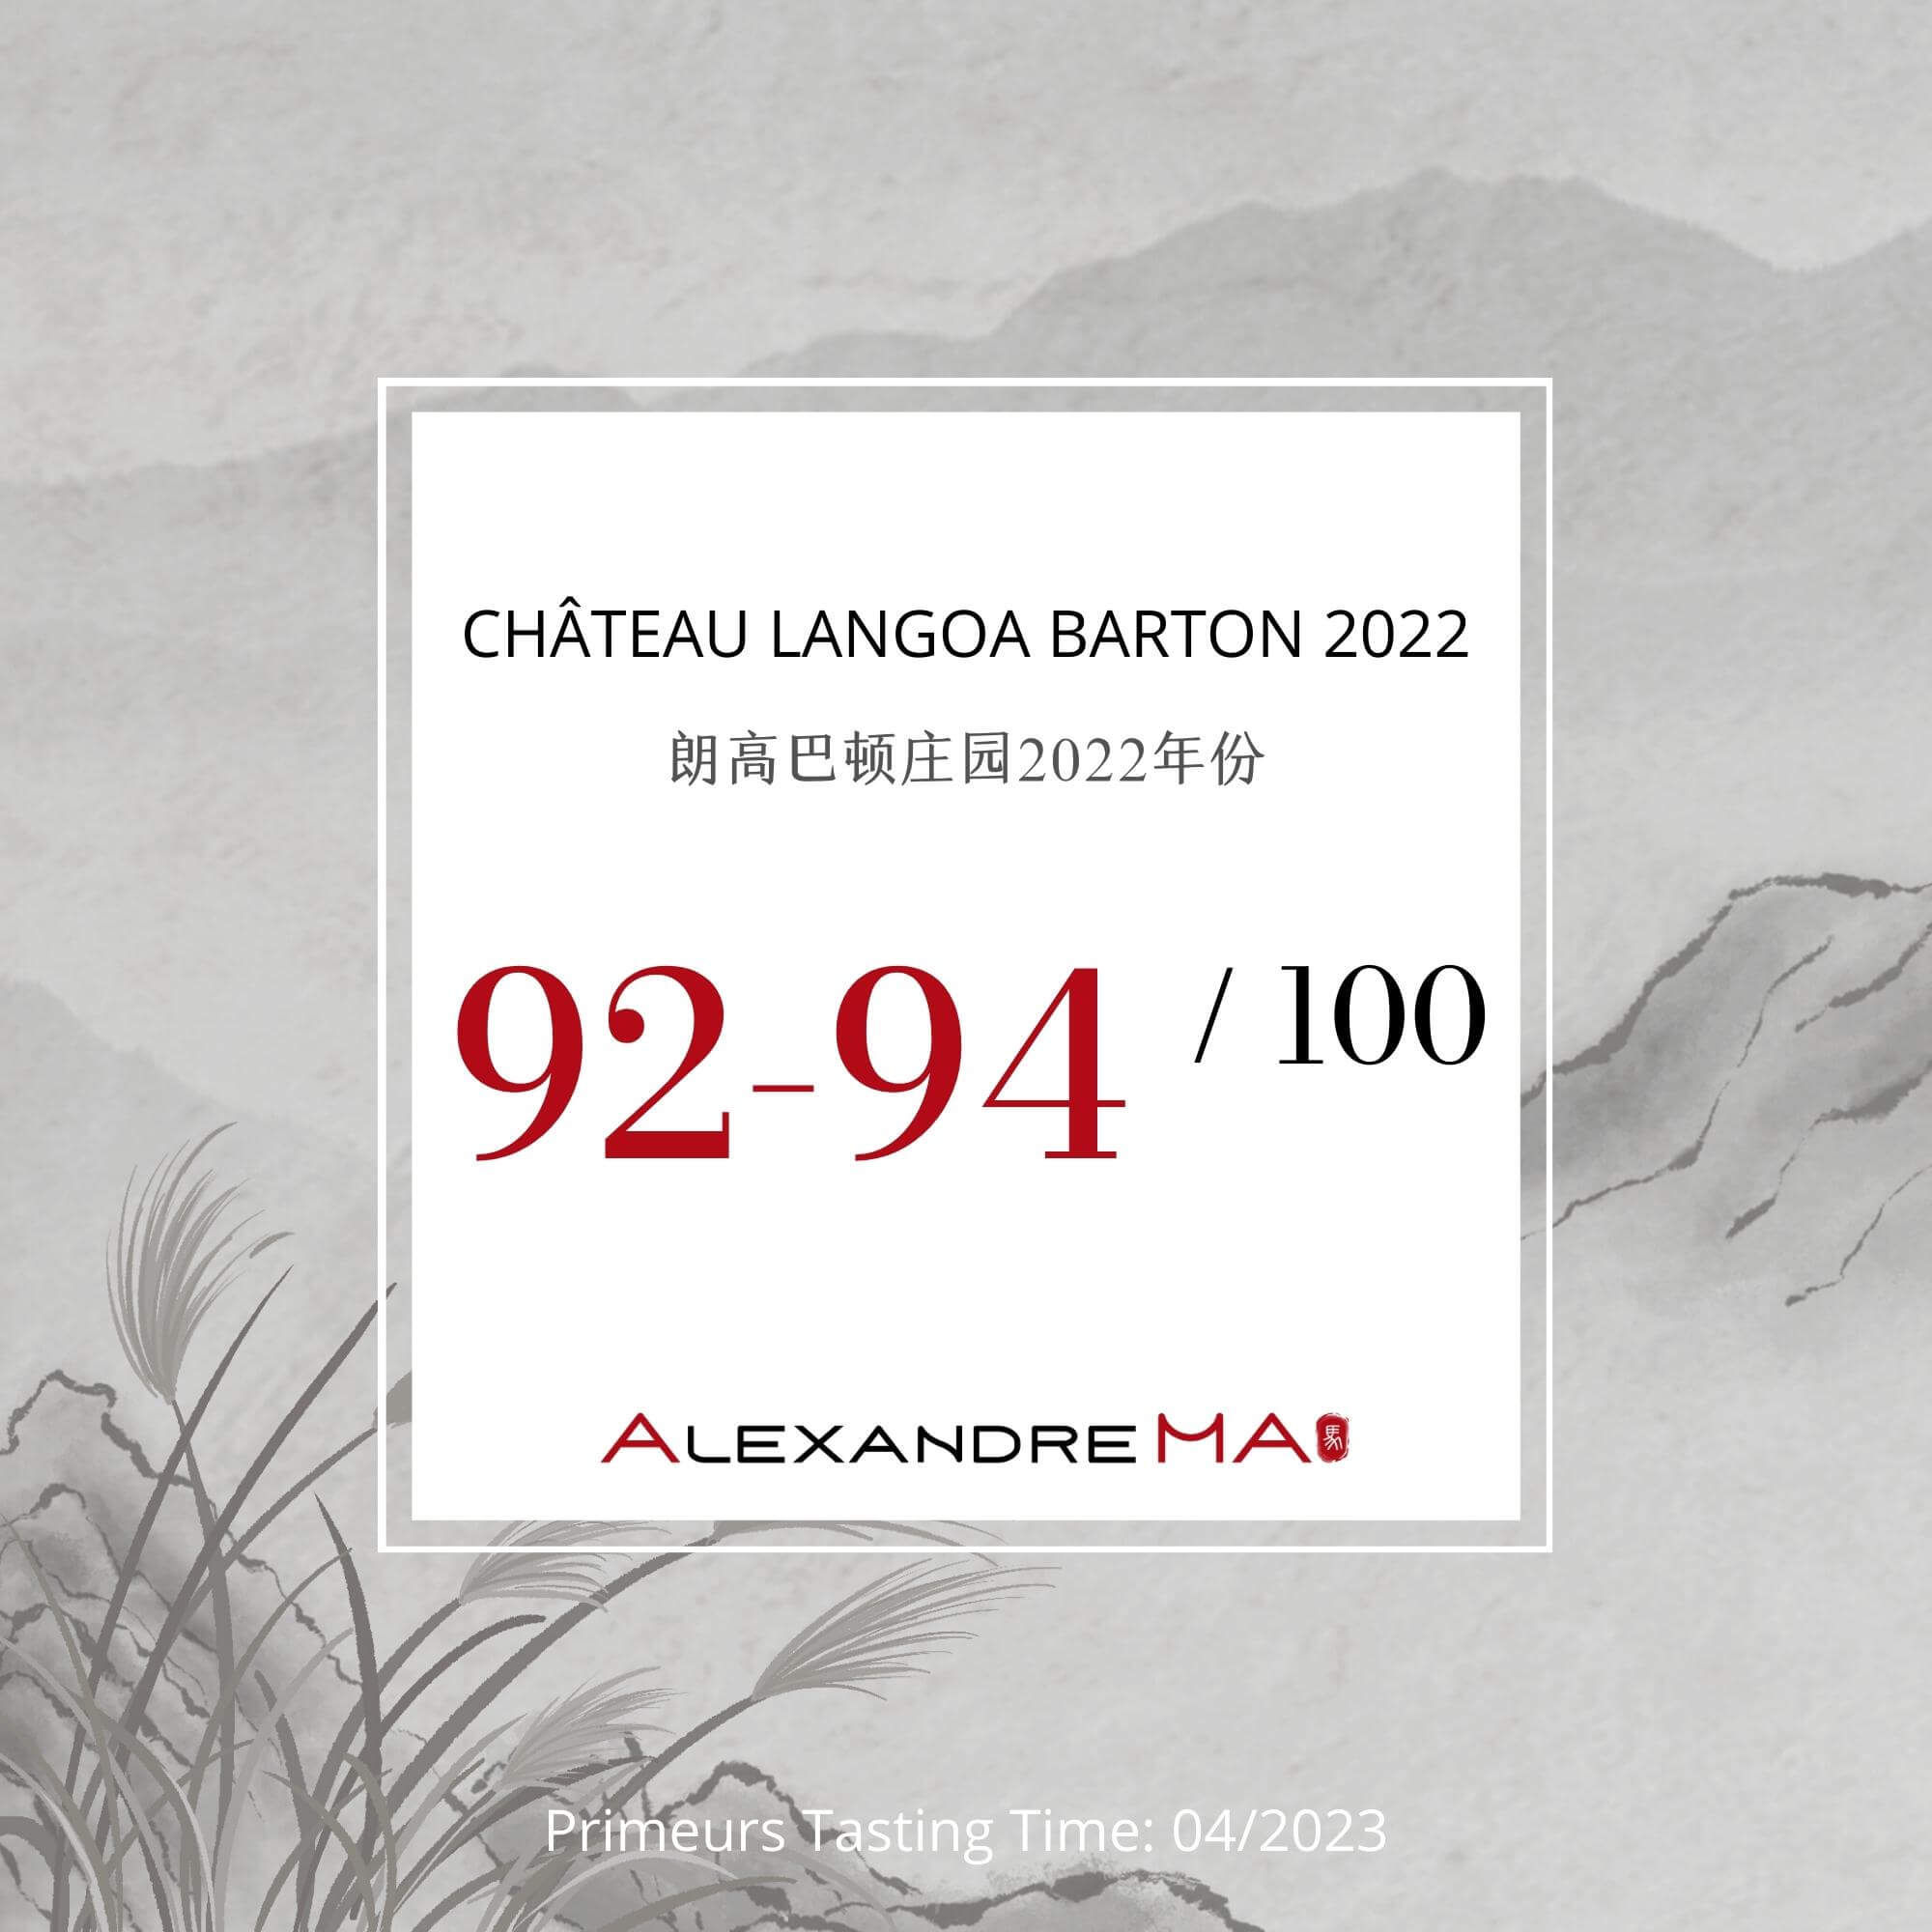 Château Langoa Barton 2022 Primeurs - Alexandre MA